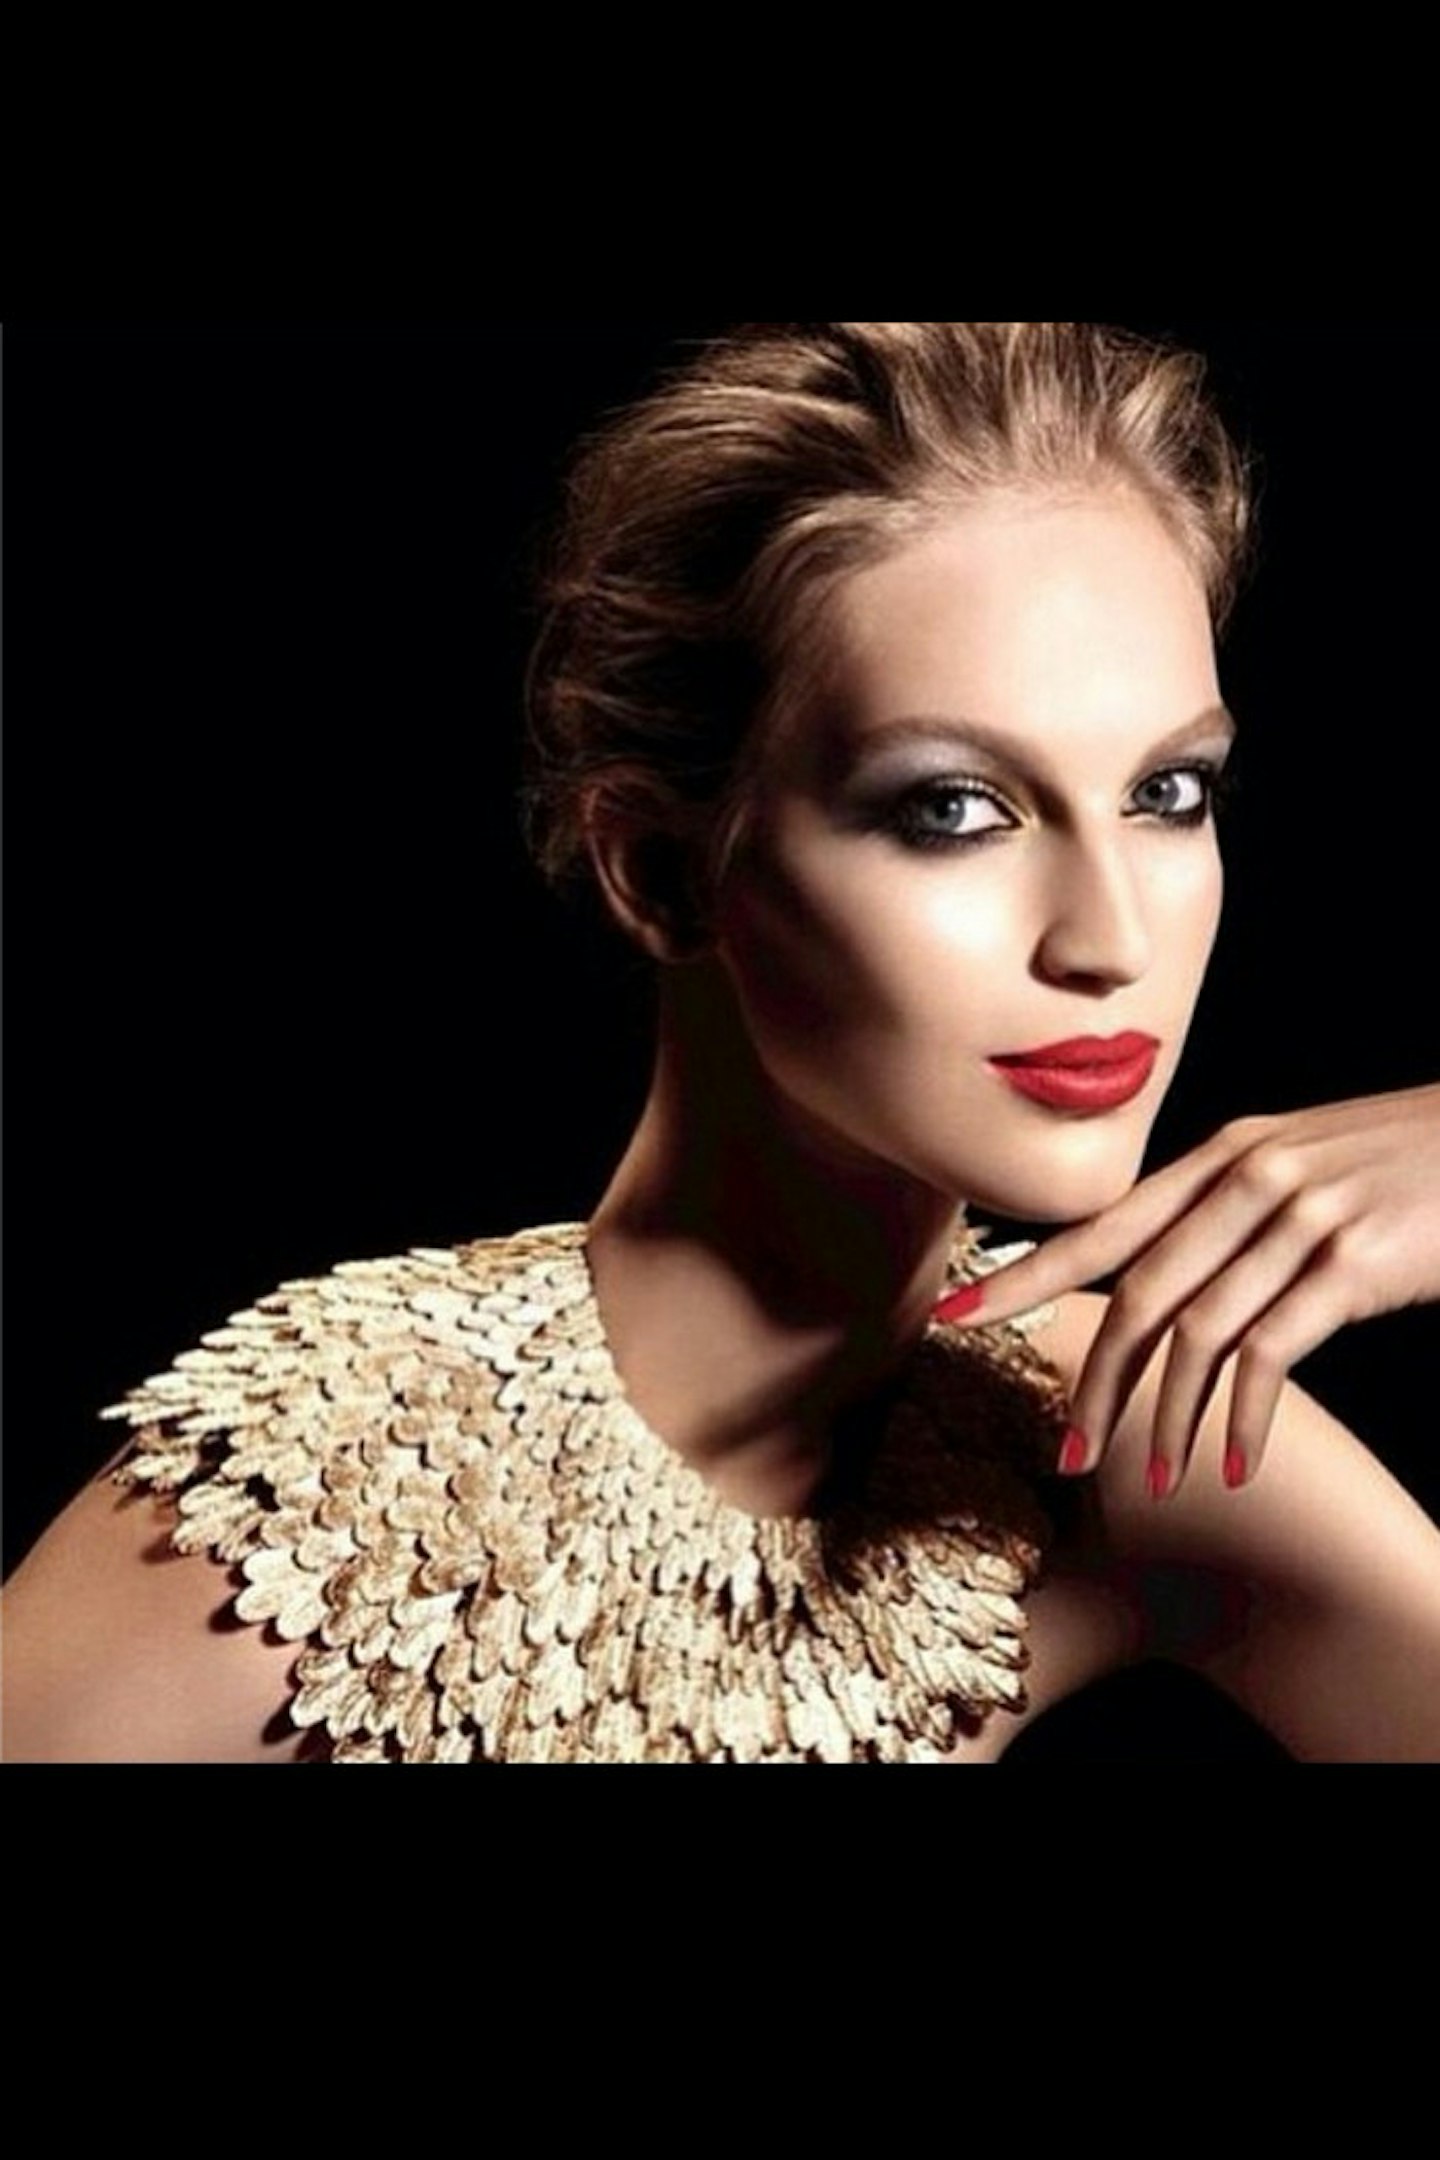 Paris Fashion Week Spring 2021: Chanel Beauty Runway Makeup